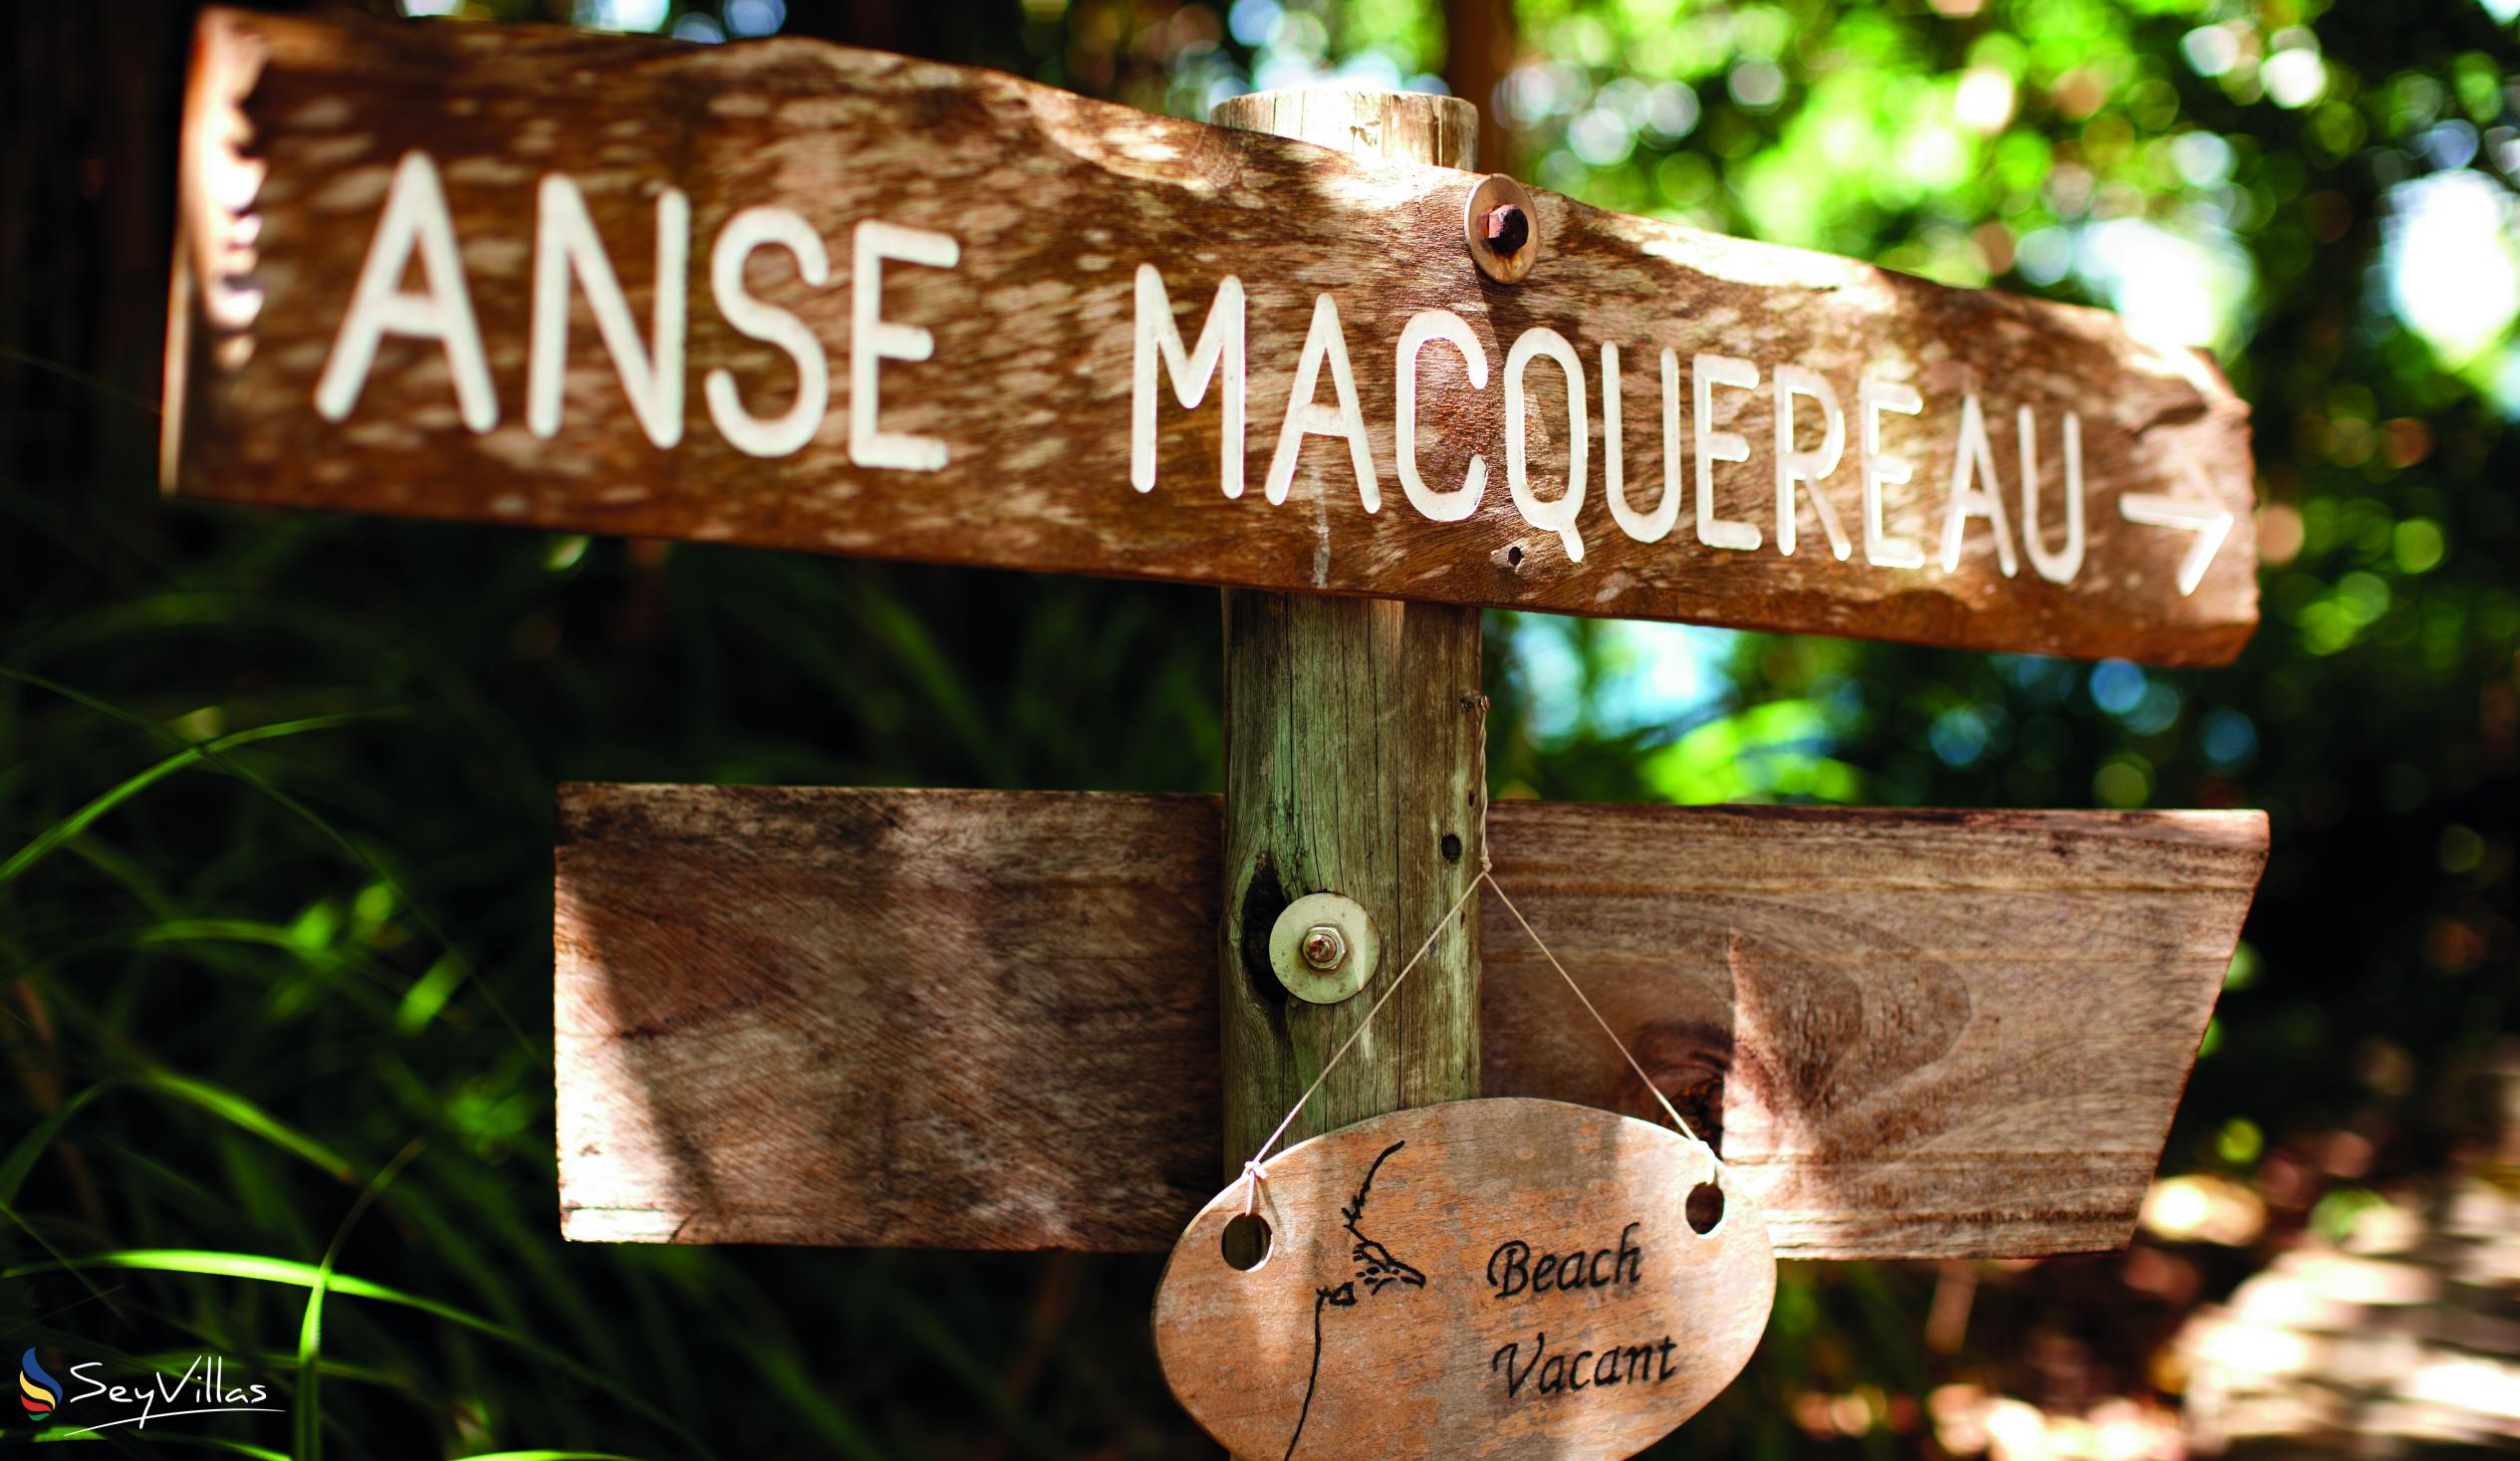 Photo 2: Anse Maquereau - Frégate - Other islands (Seychelles)